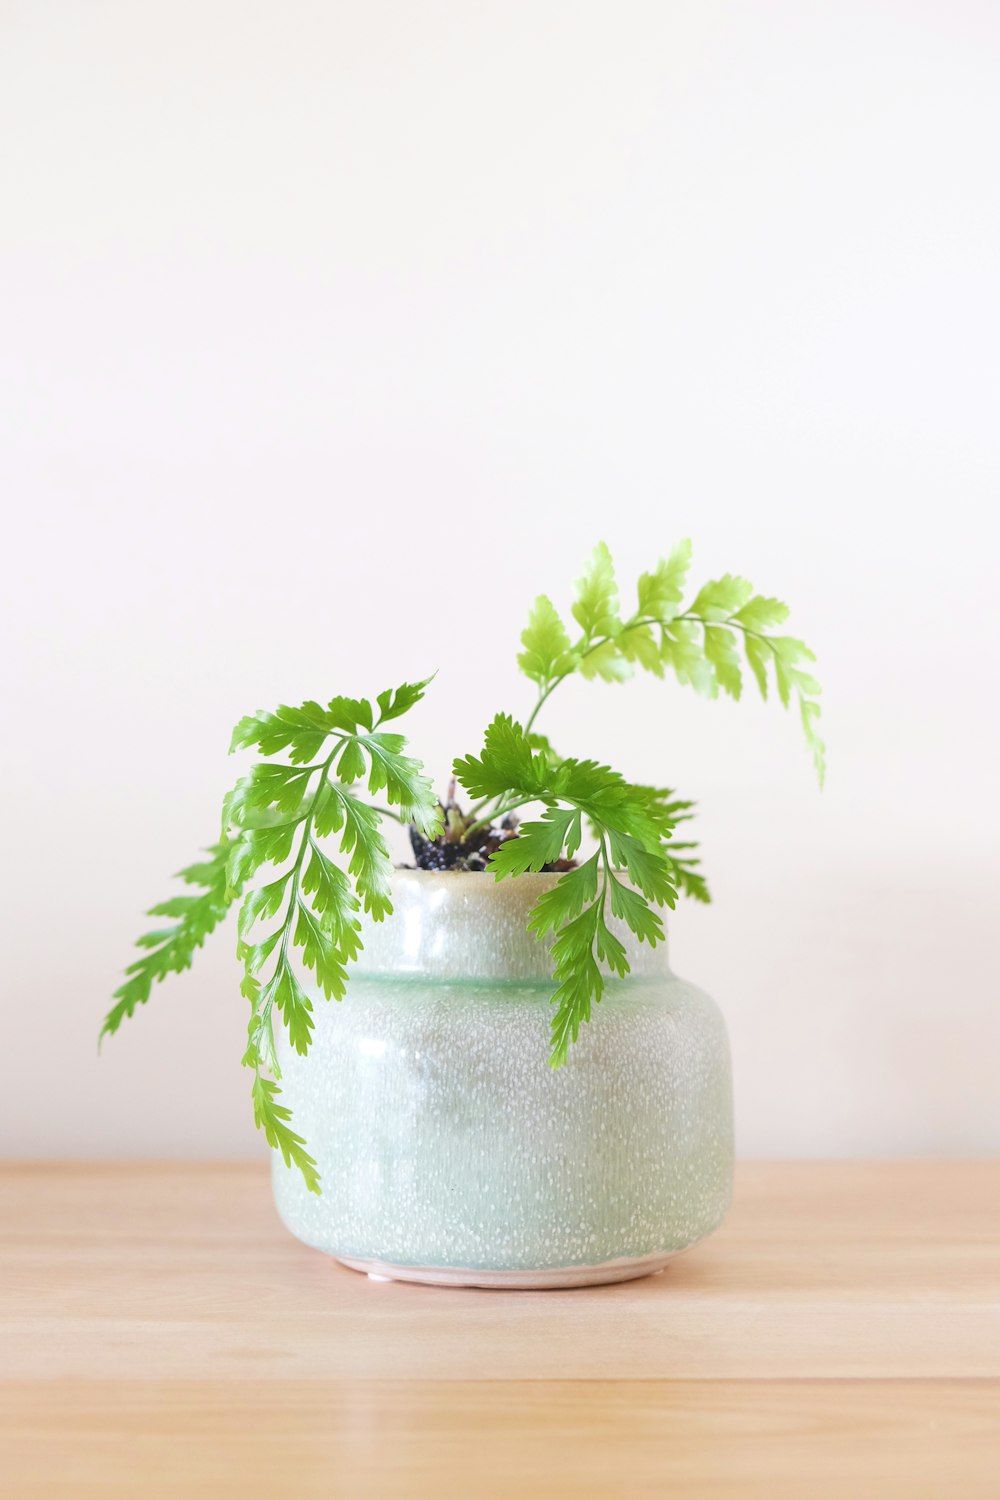 pianta a foglia verde in vaso bianco